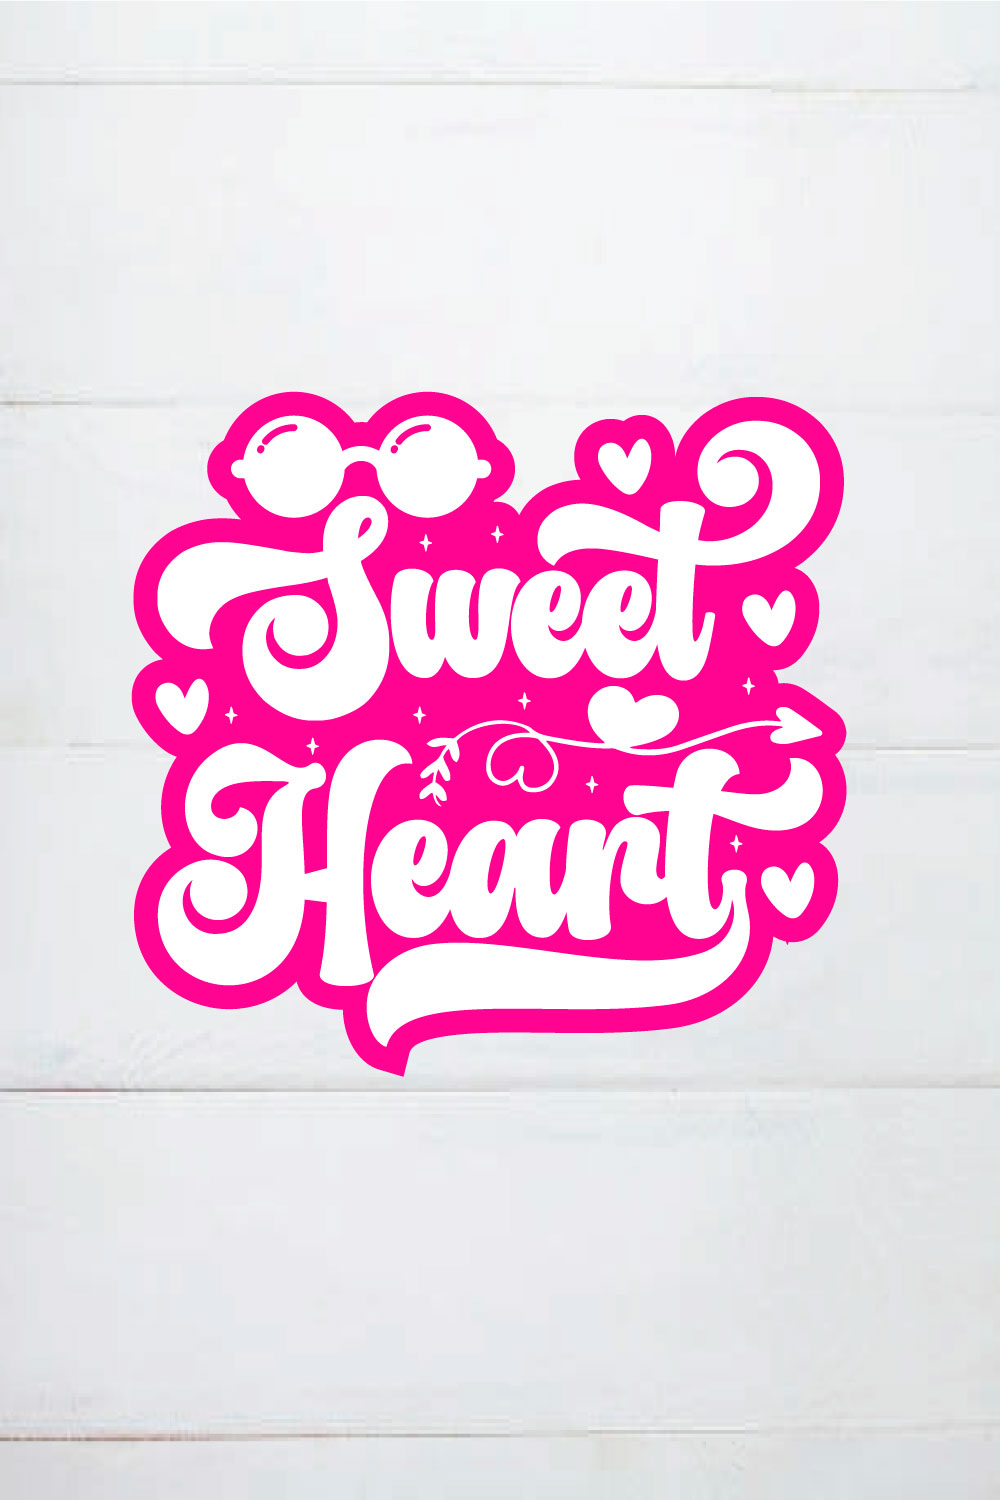 sweet heart sticker pinterest preview image.